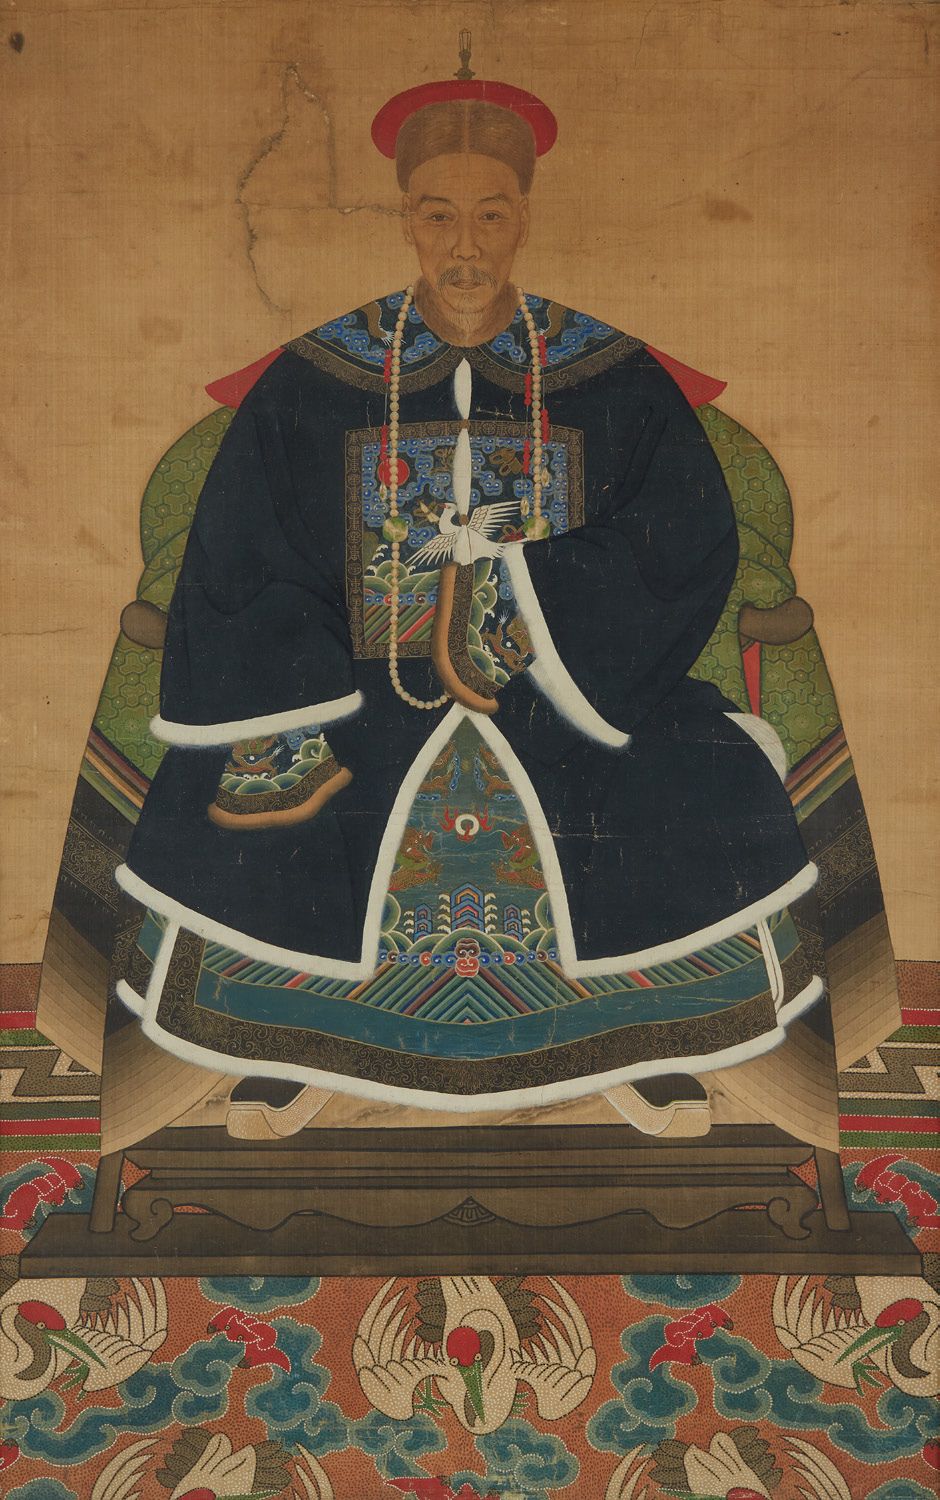 CHINE, fin XIXe siècle 一幅祖先的丝绸水墨画像，描绘了一位身着宫廷长袍的官员威风凛凛地坐在那里。
污渍和磨损。
视觉上的尺寸。100 x &hellip;